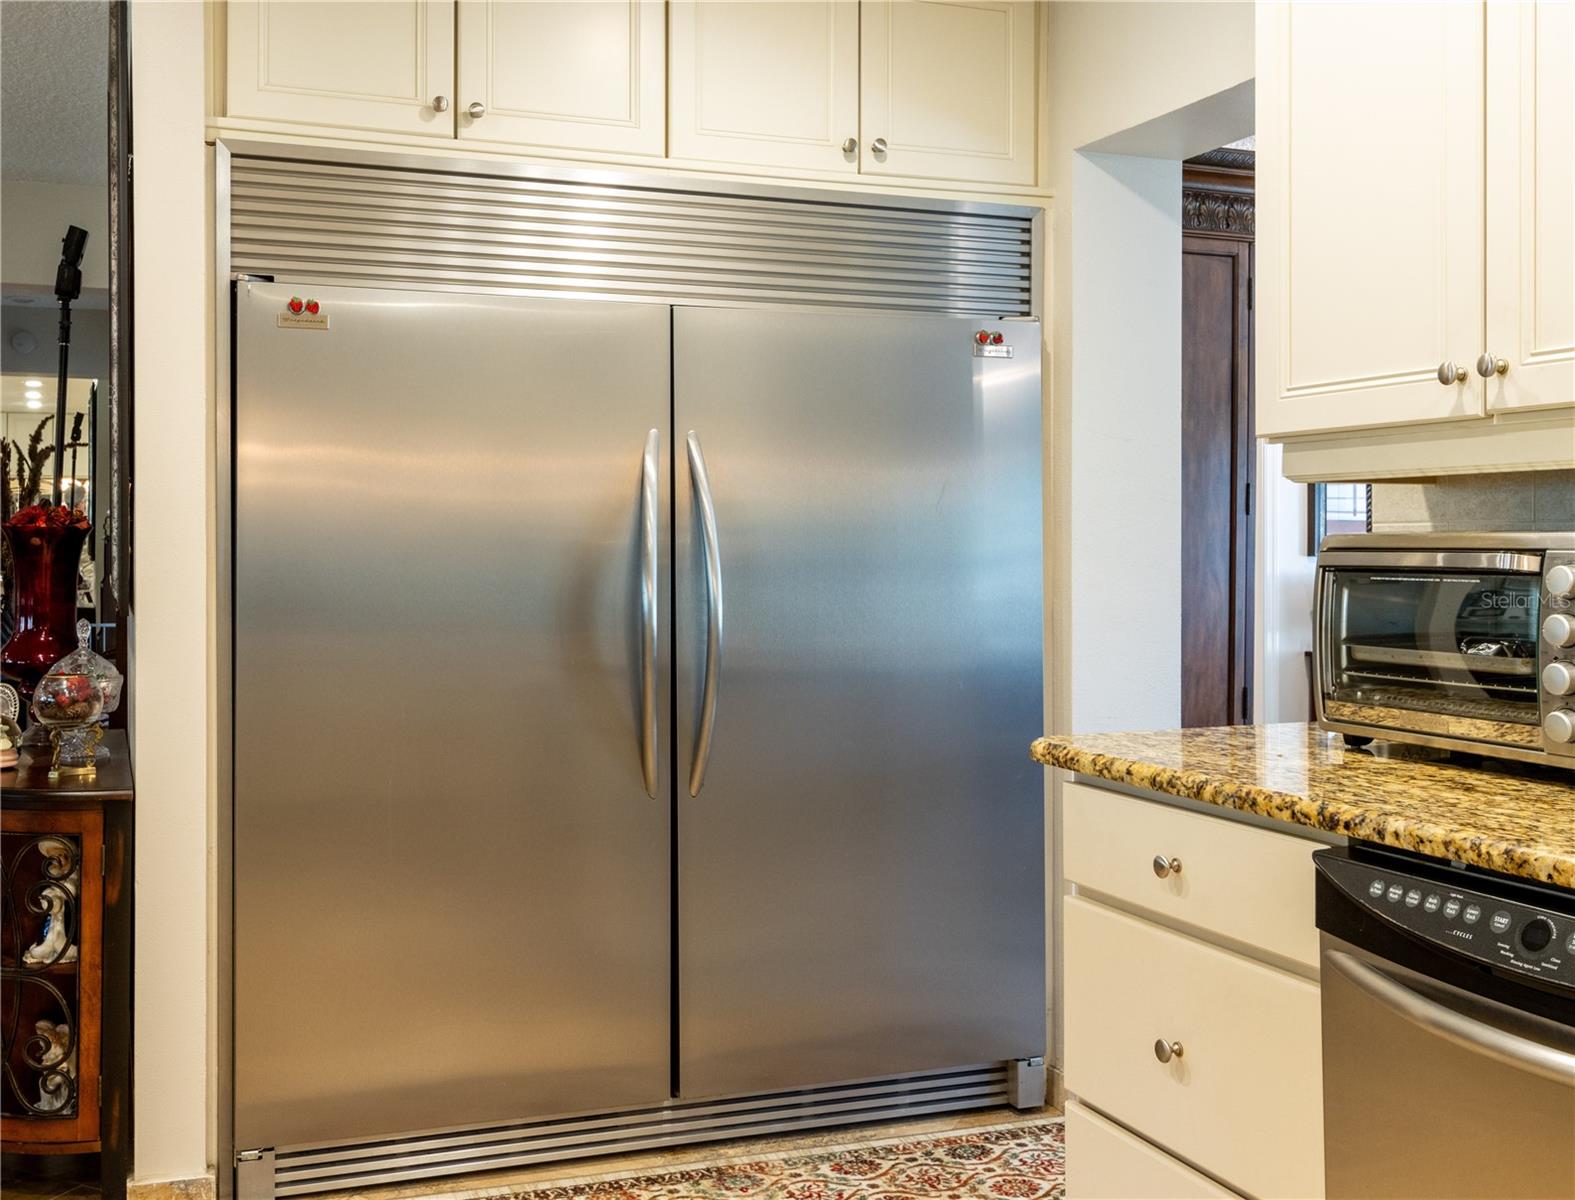 Professional Series Frigidaire refrigerator/freezer side by side.